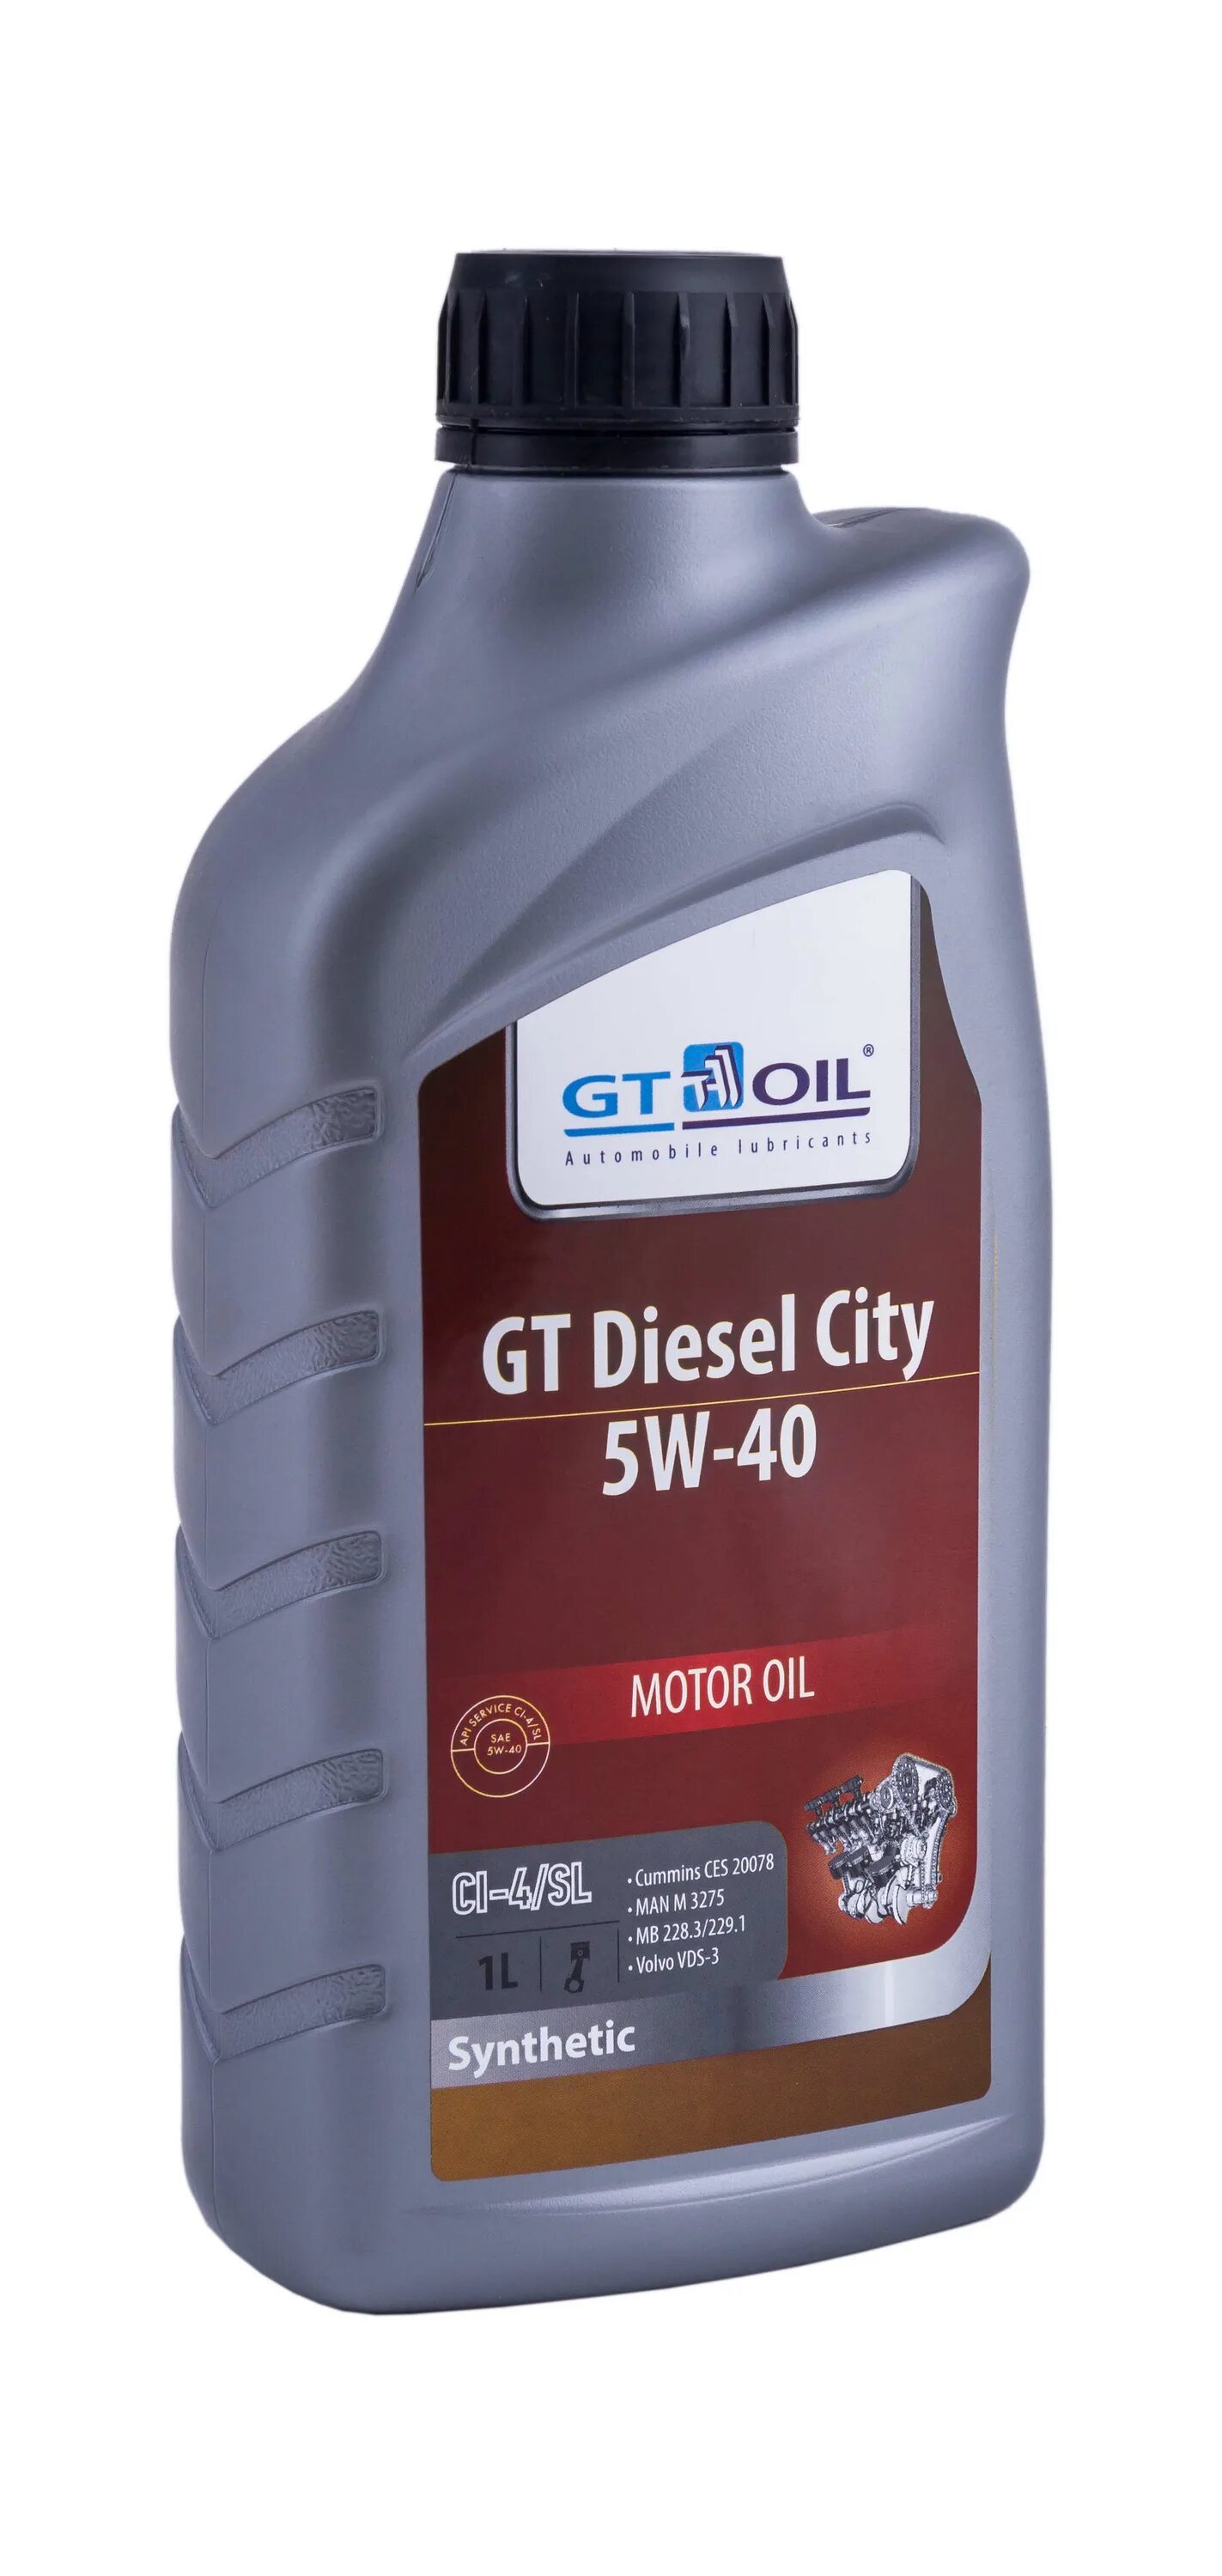 Gt Oil ATF SP IV 8809059408759. Gt Diesel City 5w-40 4л. Масло трансмиссионное gt Oil gt ATF Type IV Multi vehicle синтетическое 1 л. Gt Oil арт. 8809059408759. Трансмиссионное масло gt